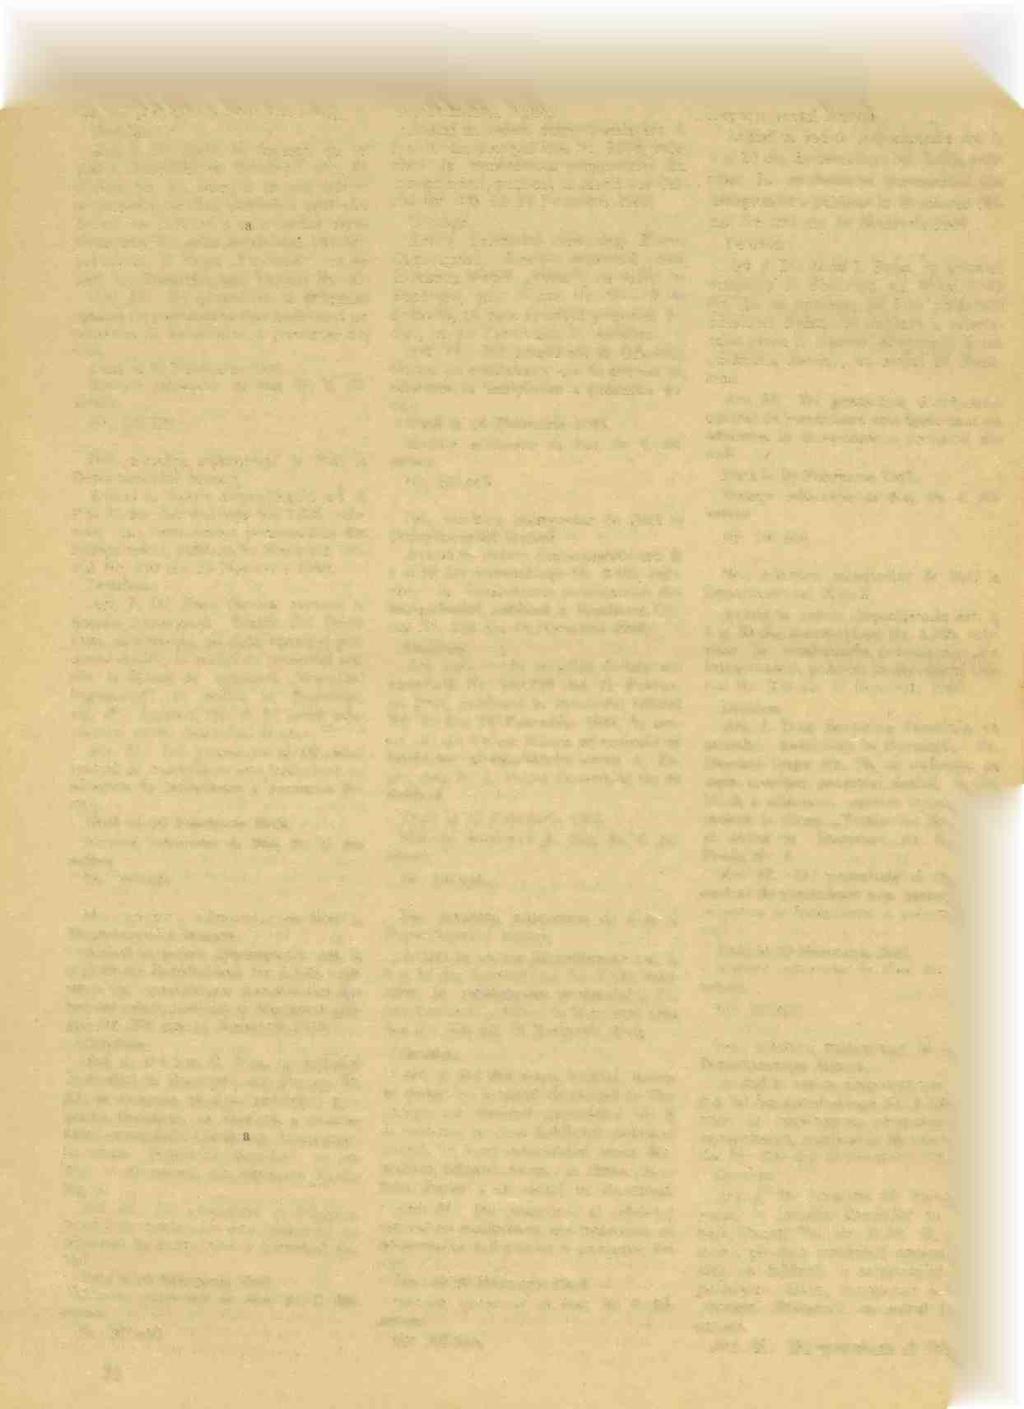 1370 i1ion1torui, OFICTAti (Partea f).ny, 50 27 Februarie 042 intreprinderi, publieat in Monitorul Ofi- Nr. 270 din 16 oemvre 1940, Deeldem: Art. I. Dd Radu N.